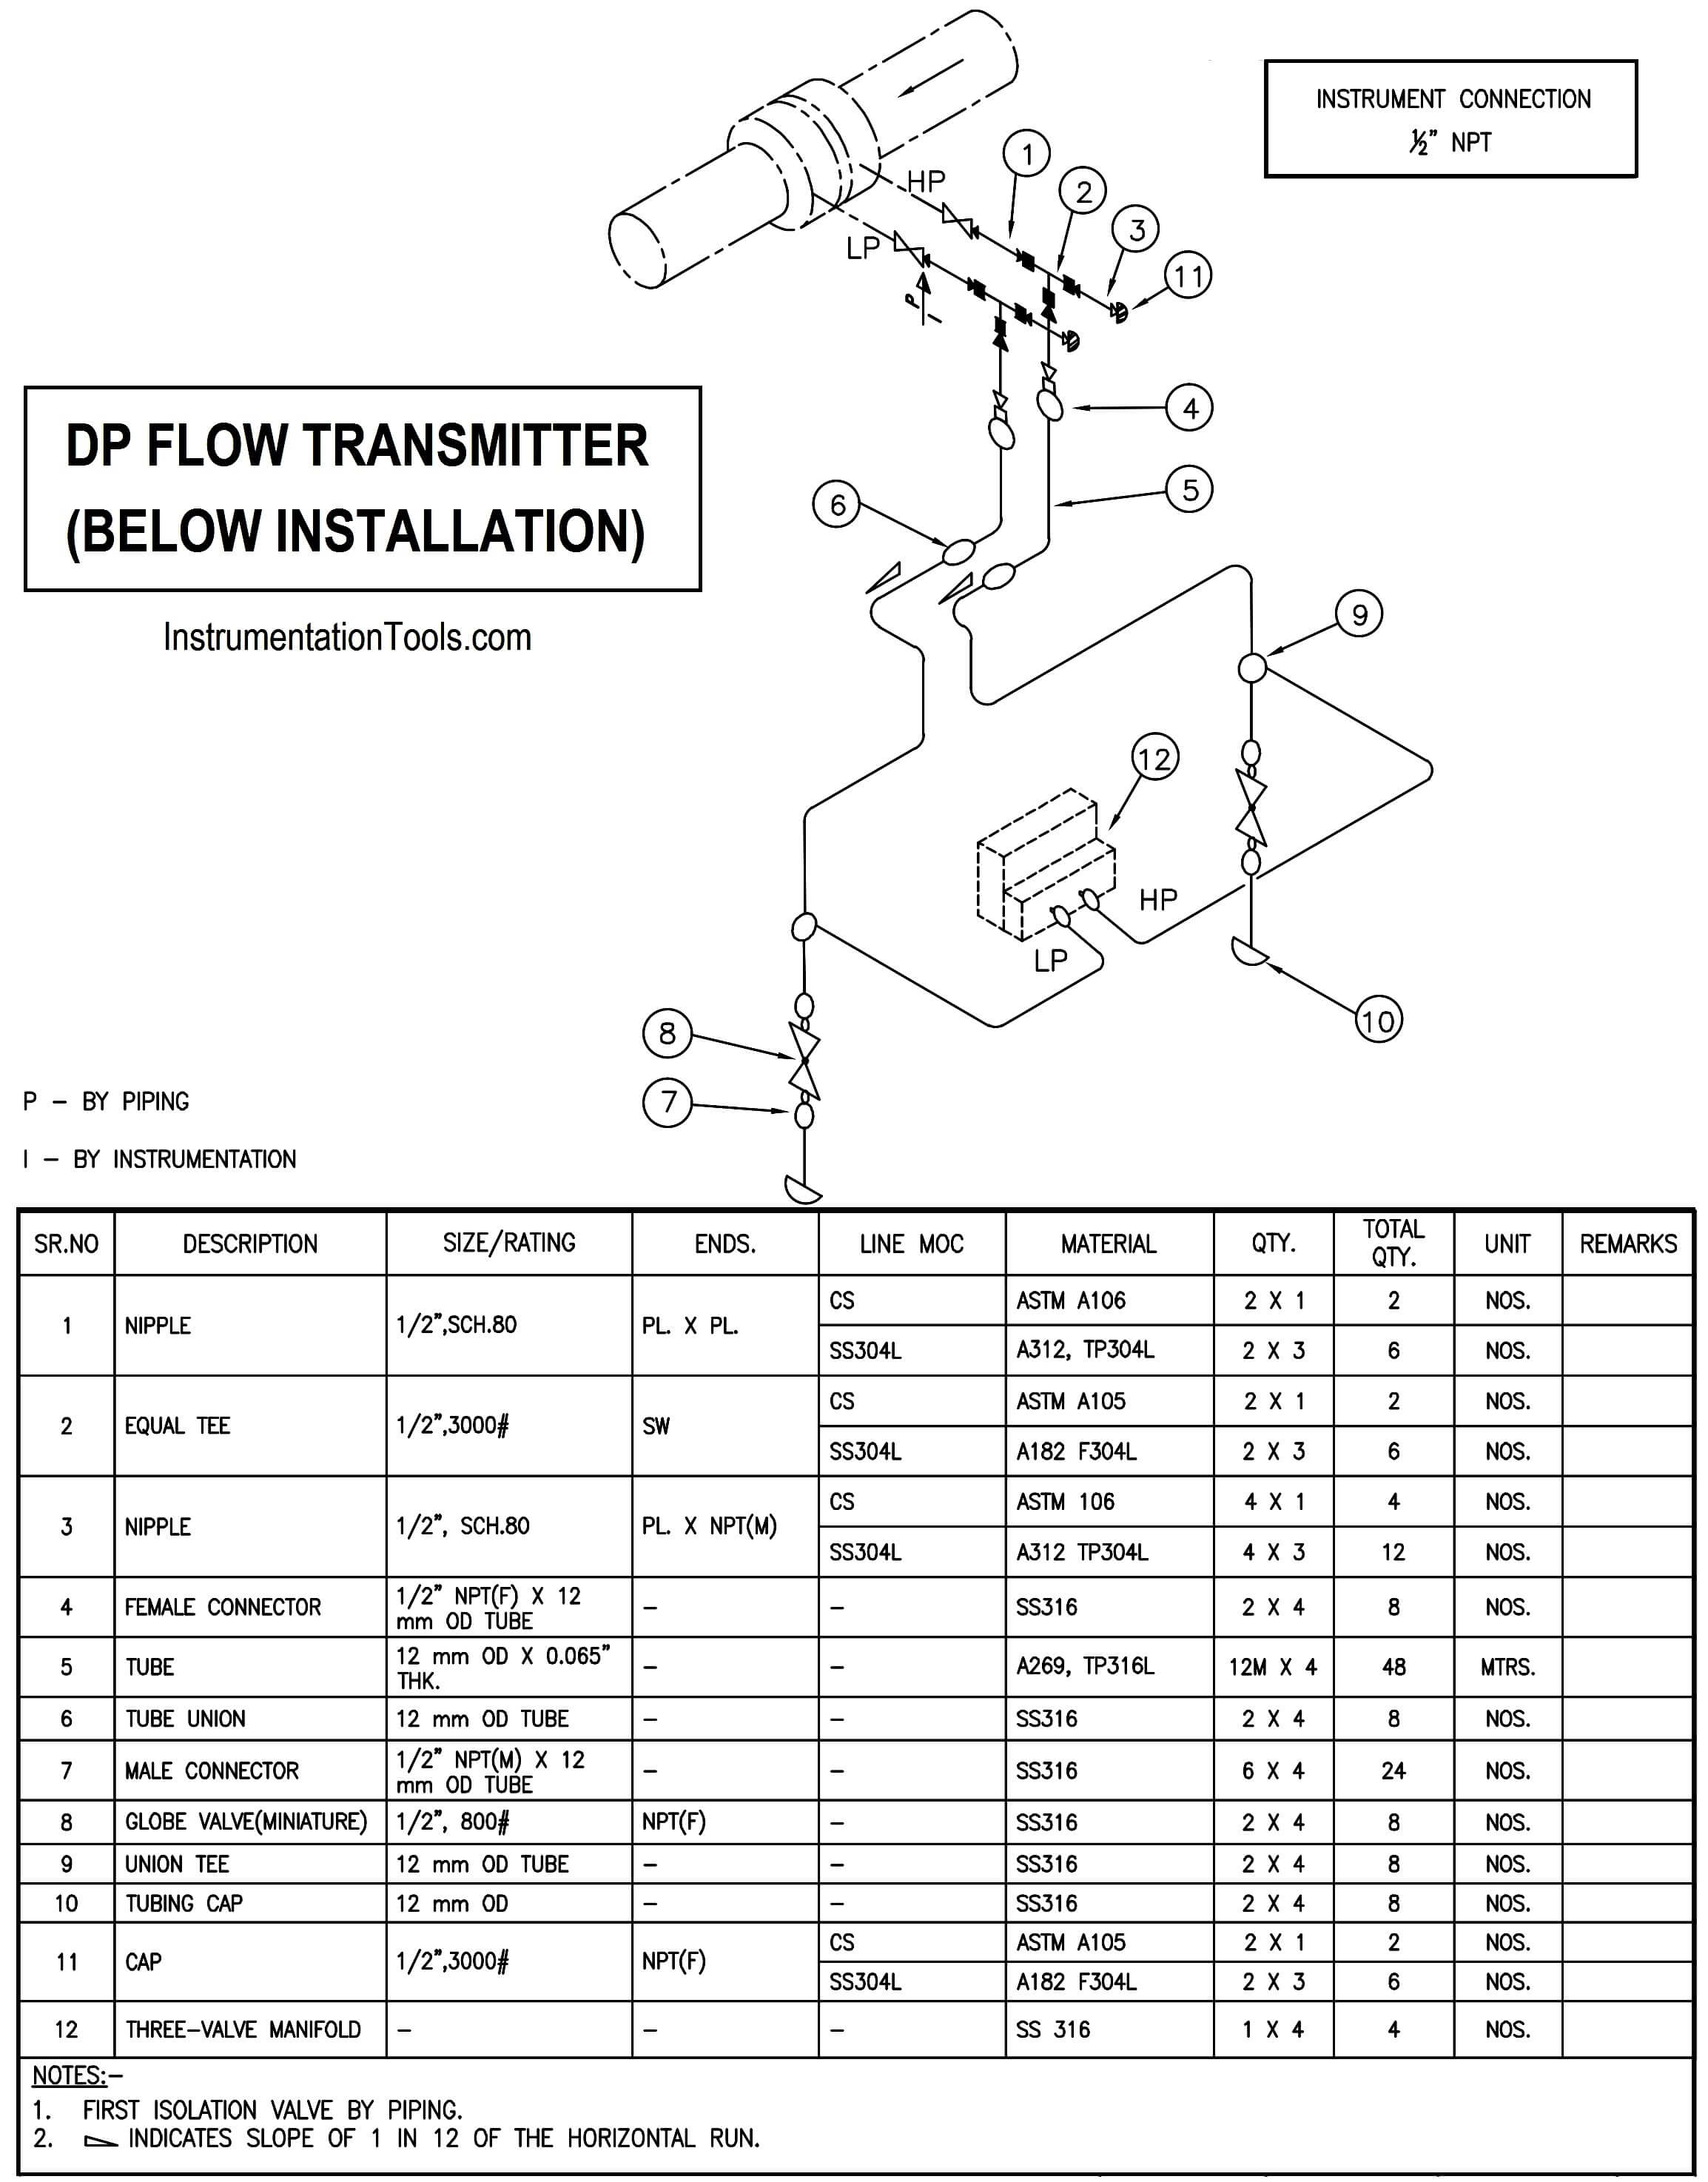 Instrument Hook-up diagram for Differential Pressure Transmitter